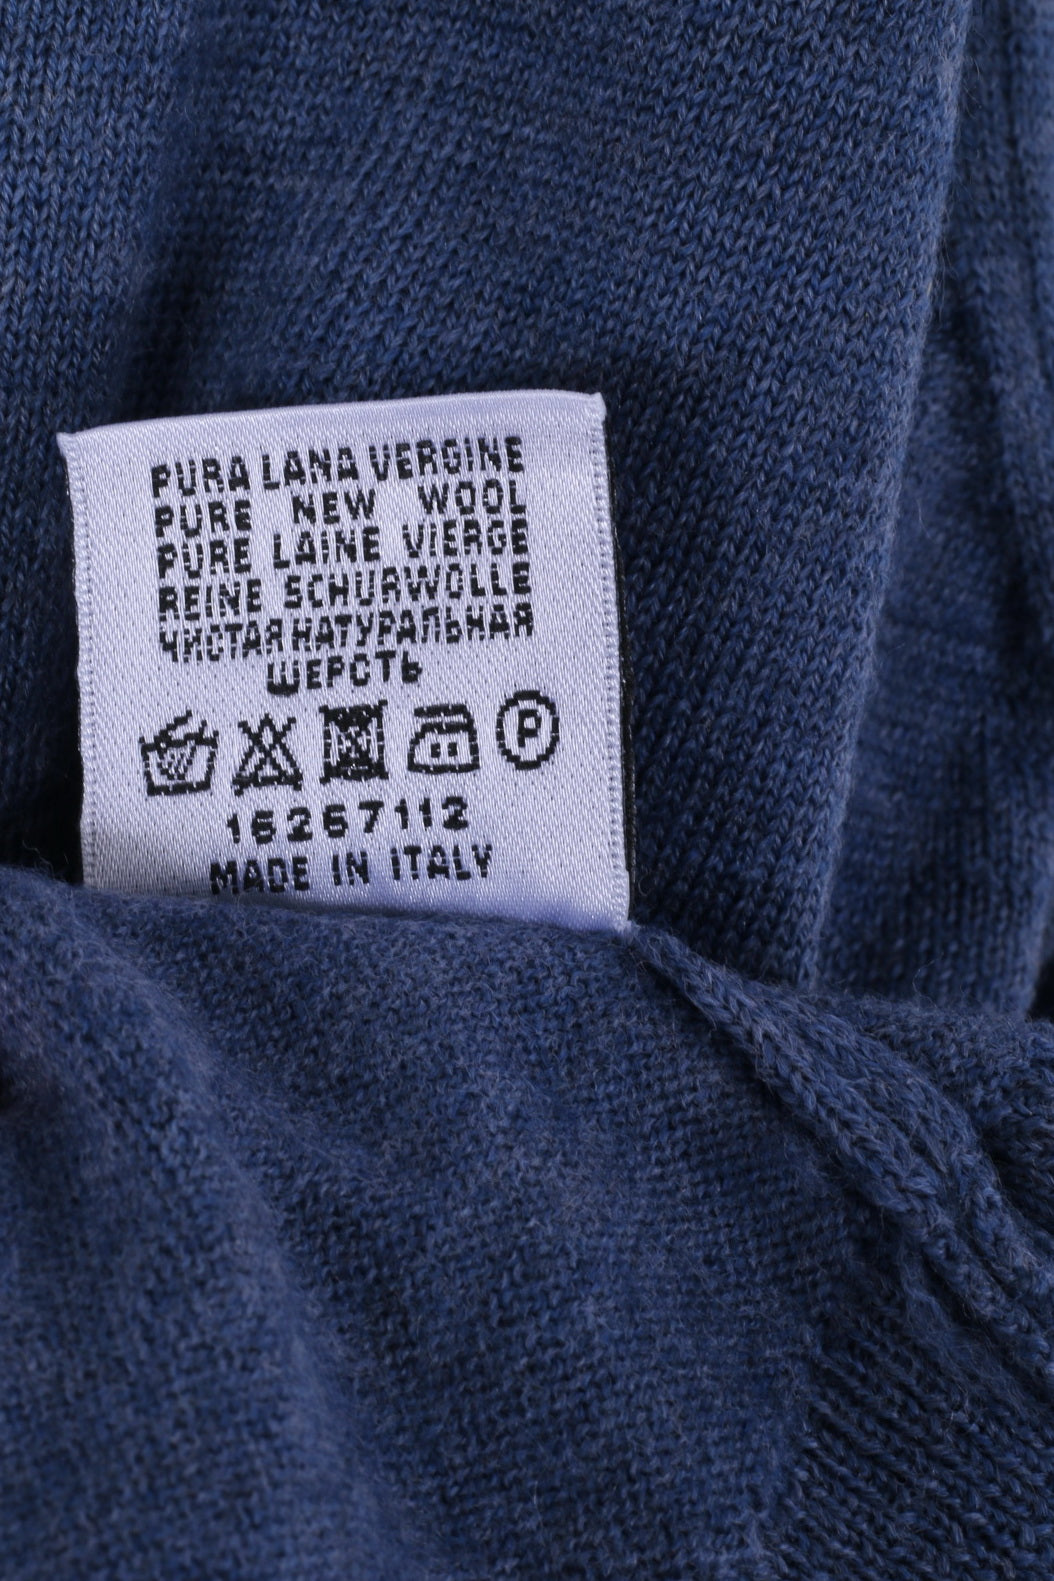 Larryknitwear Mens XL Jumper Blue Crew Neck Plain Classic Sweater Made in Italy